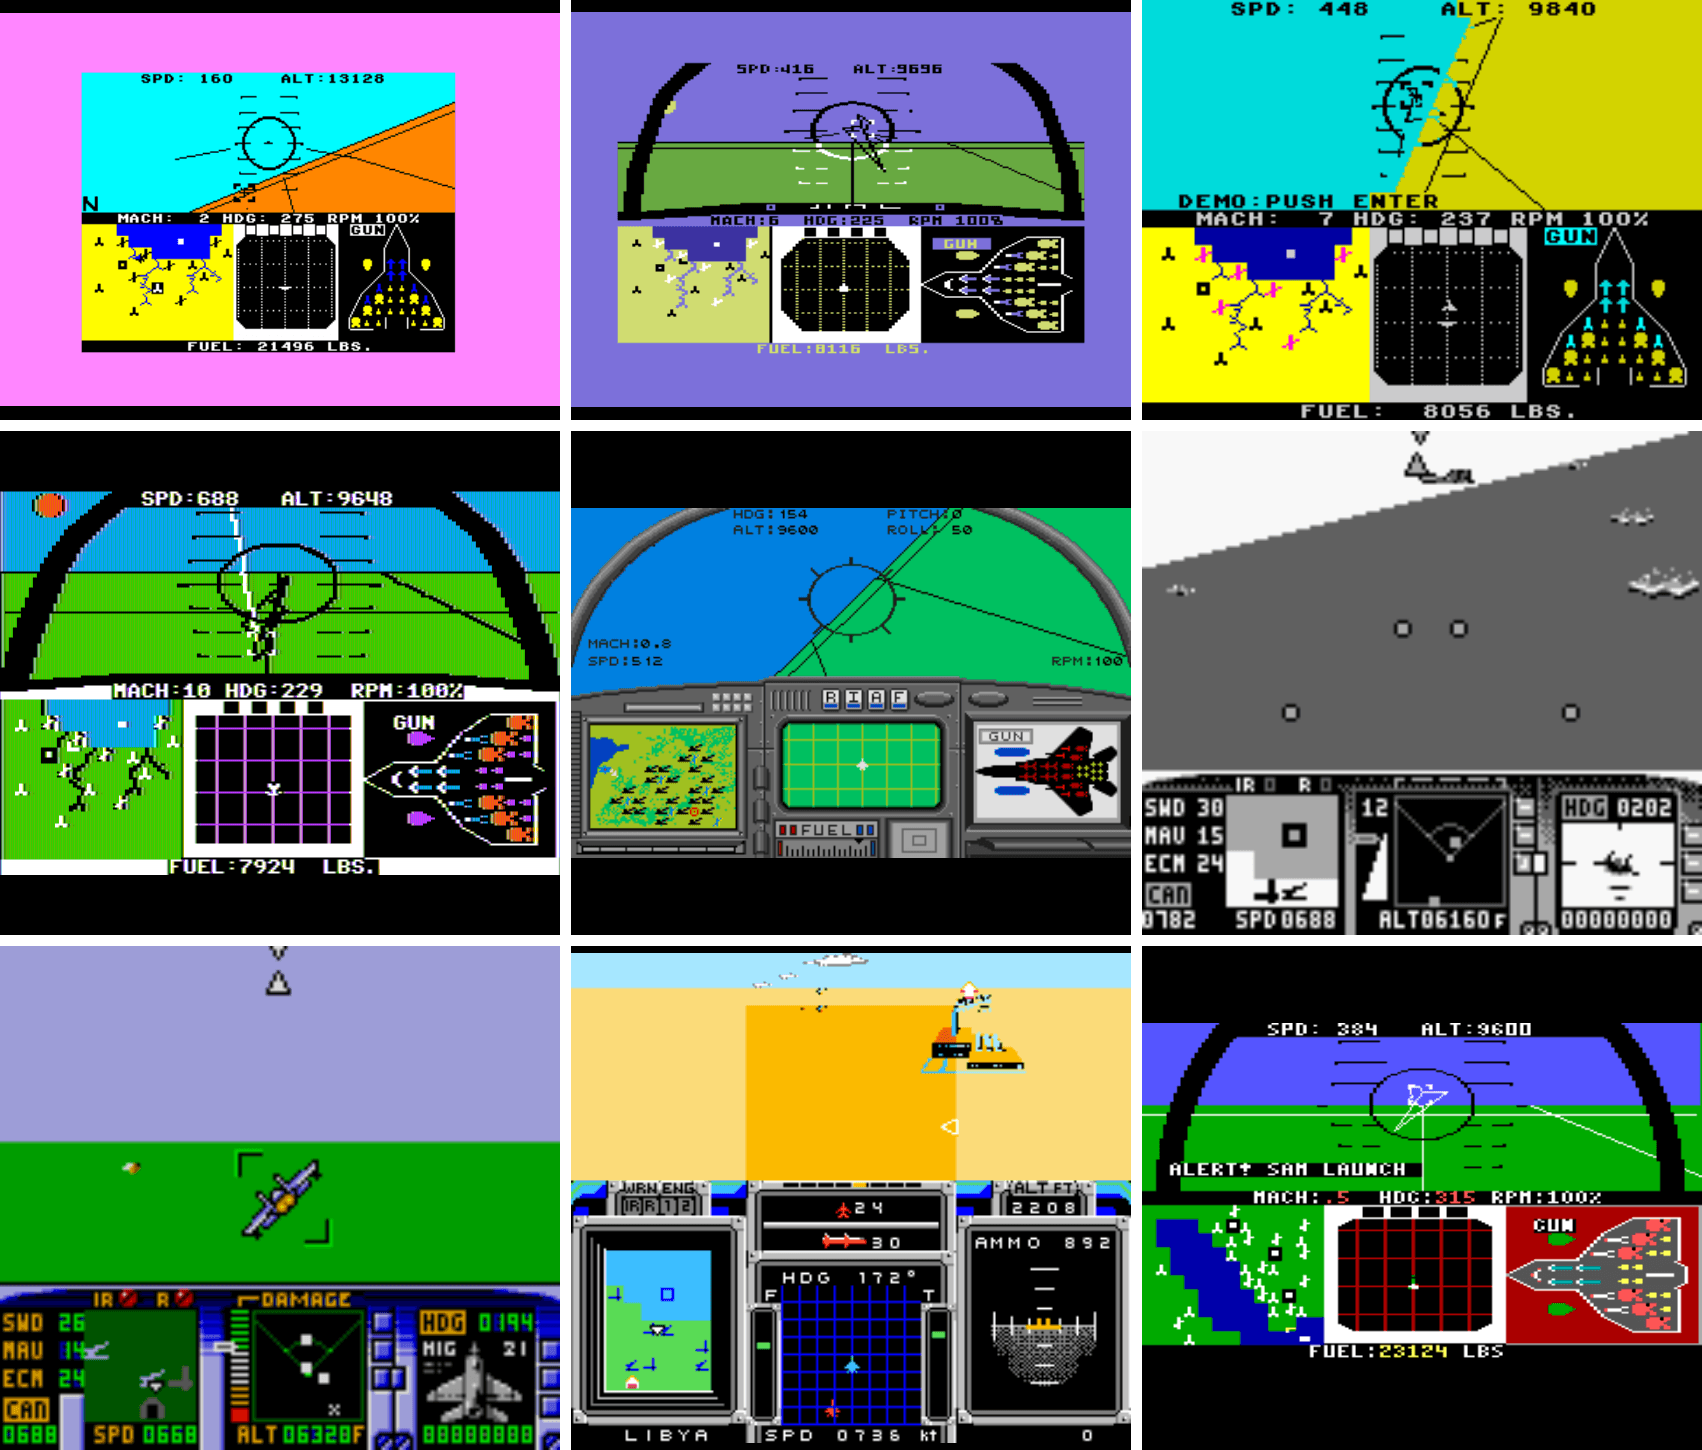 Image For Post | amstrad - c64 - spectrum
apple ii - atari st - game boy
game gear - nes - pc